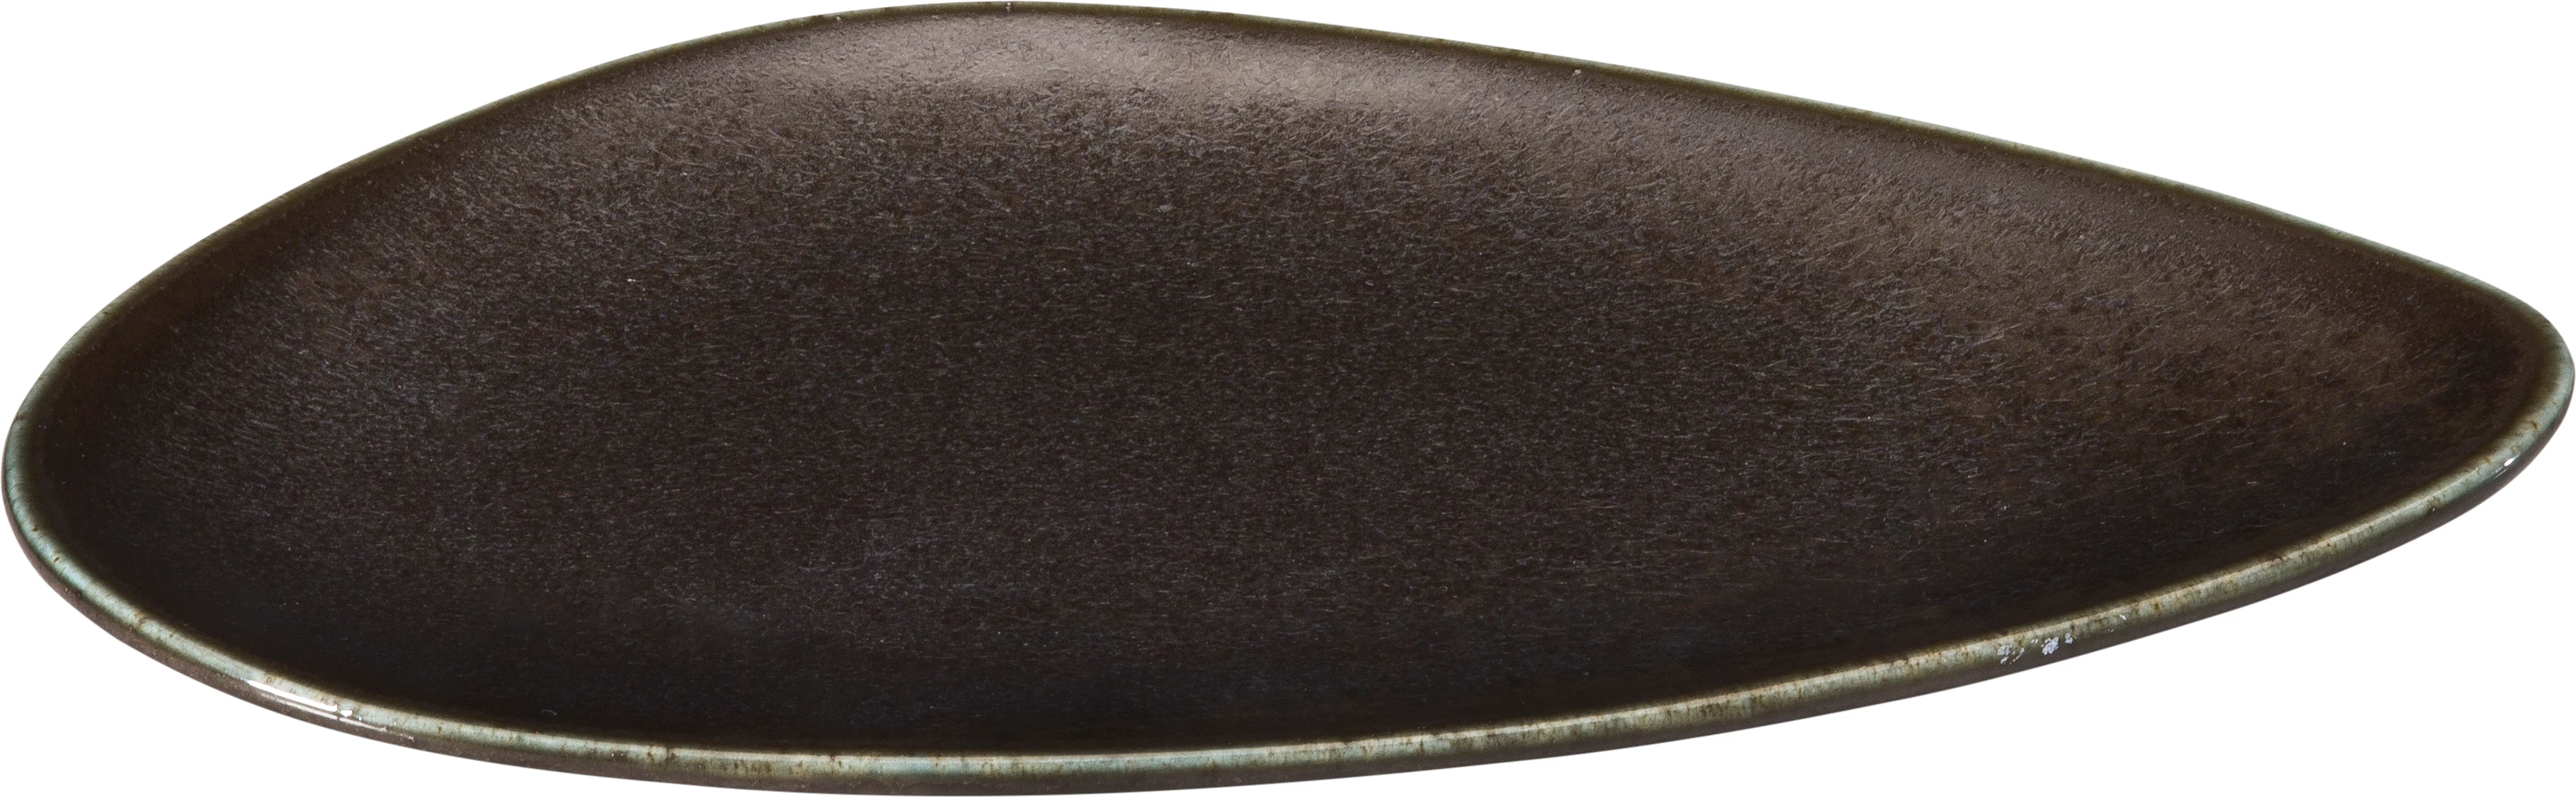 Dust trekantet tallerken, brun, 24 x 15 cm